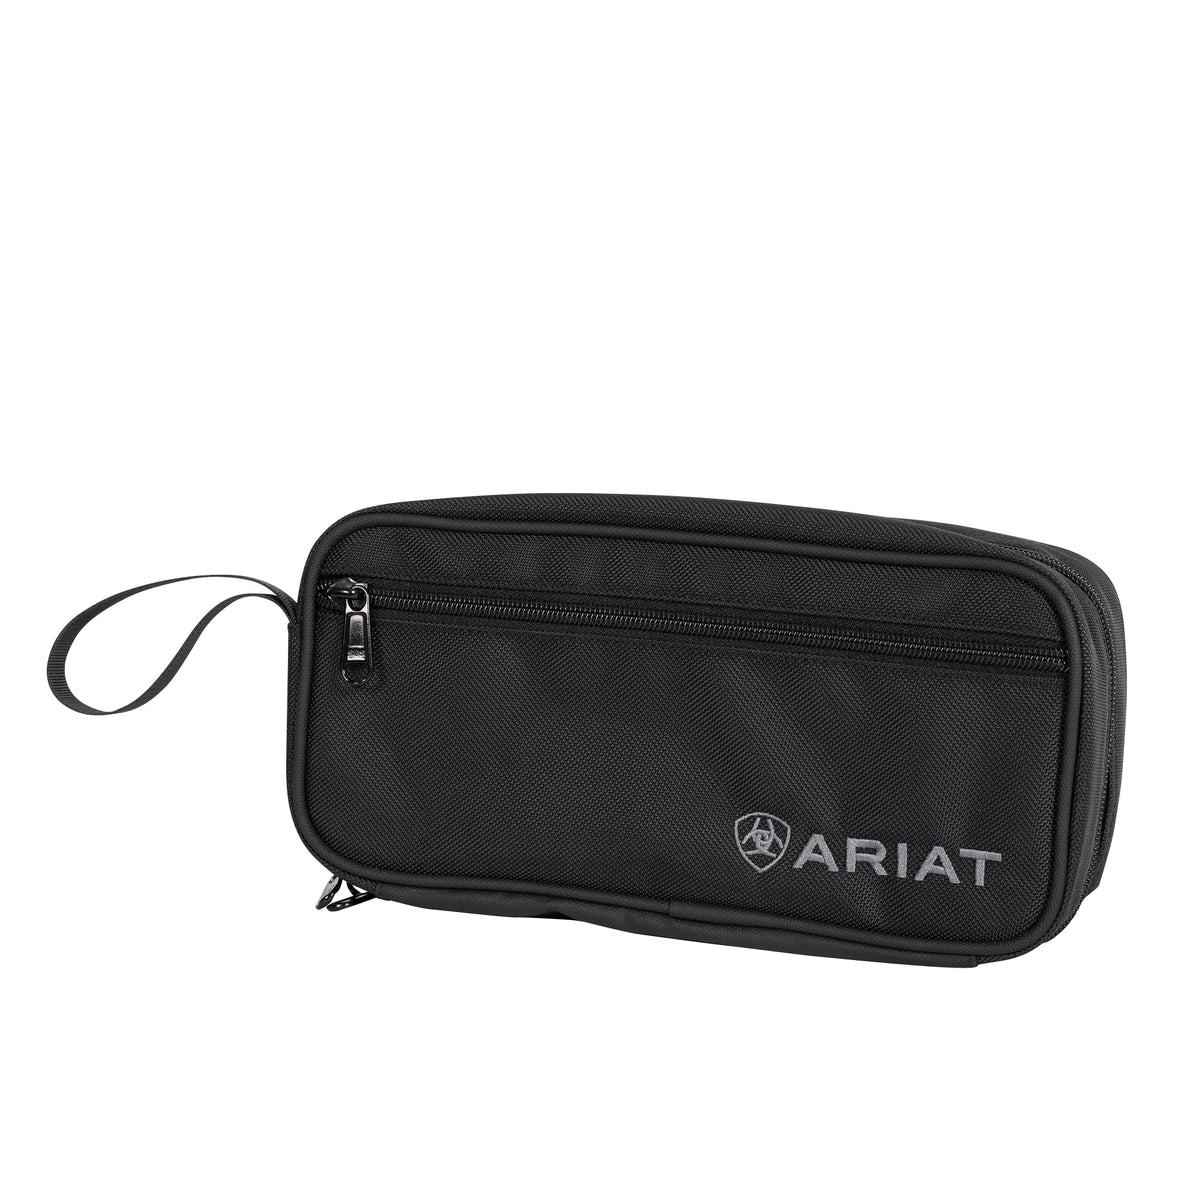 Ariat Unisex Toiletries Bag - Black